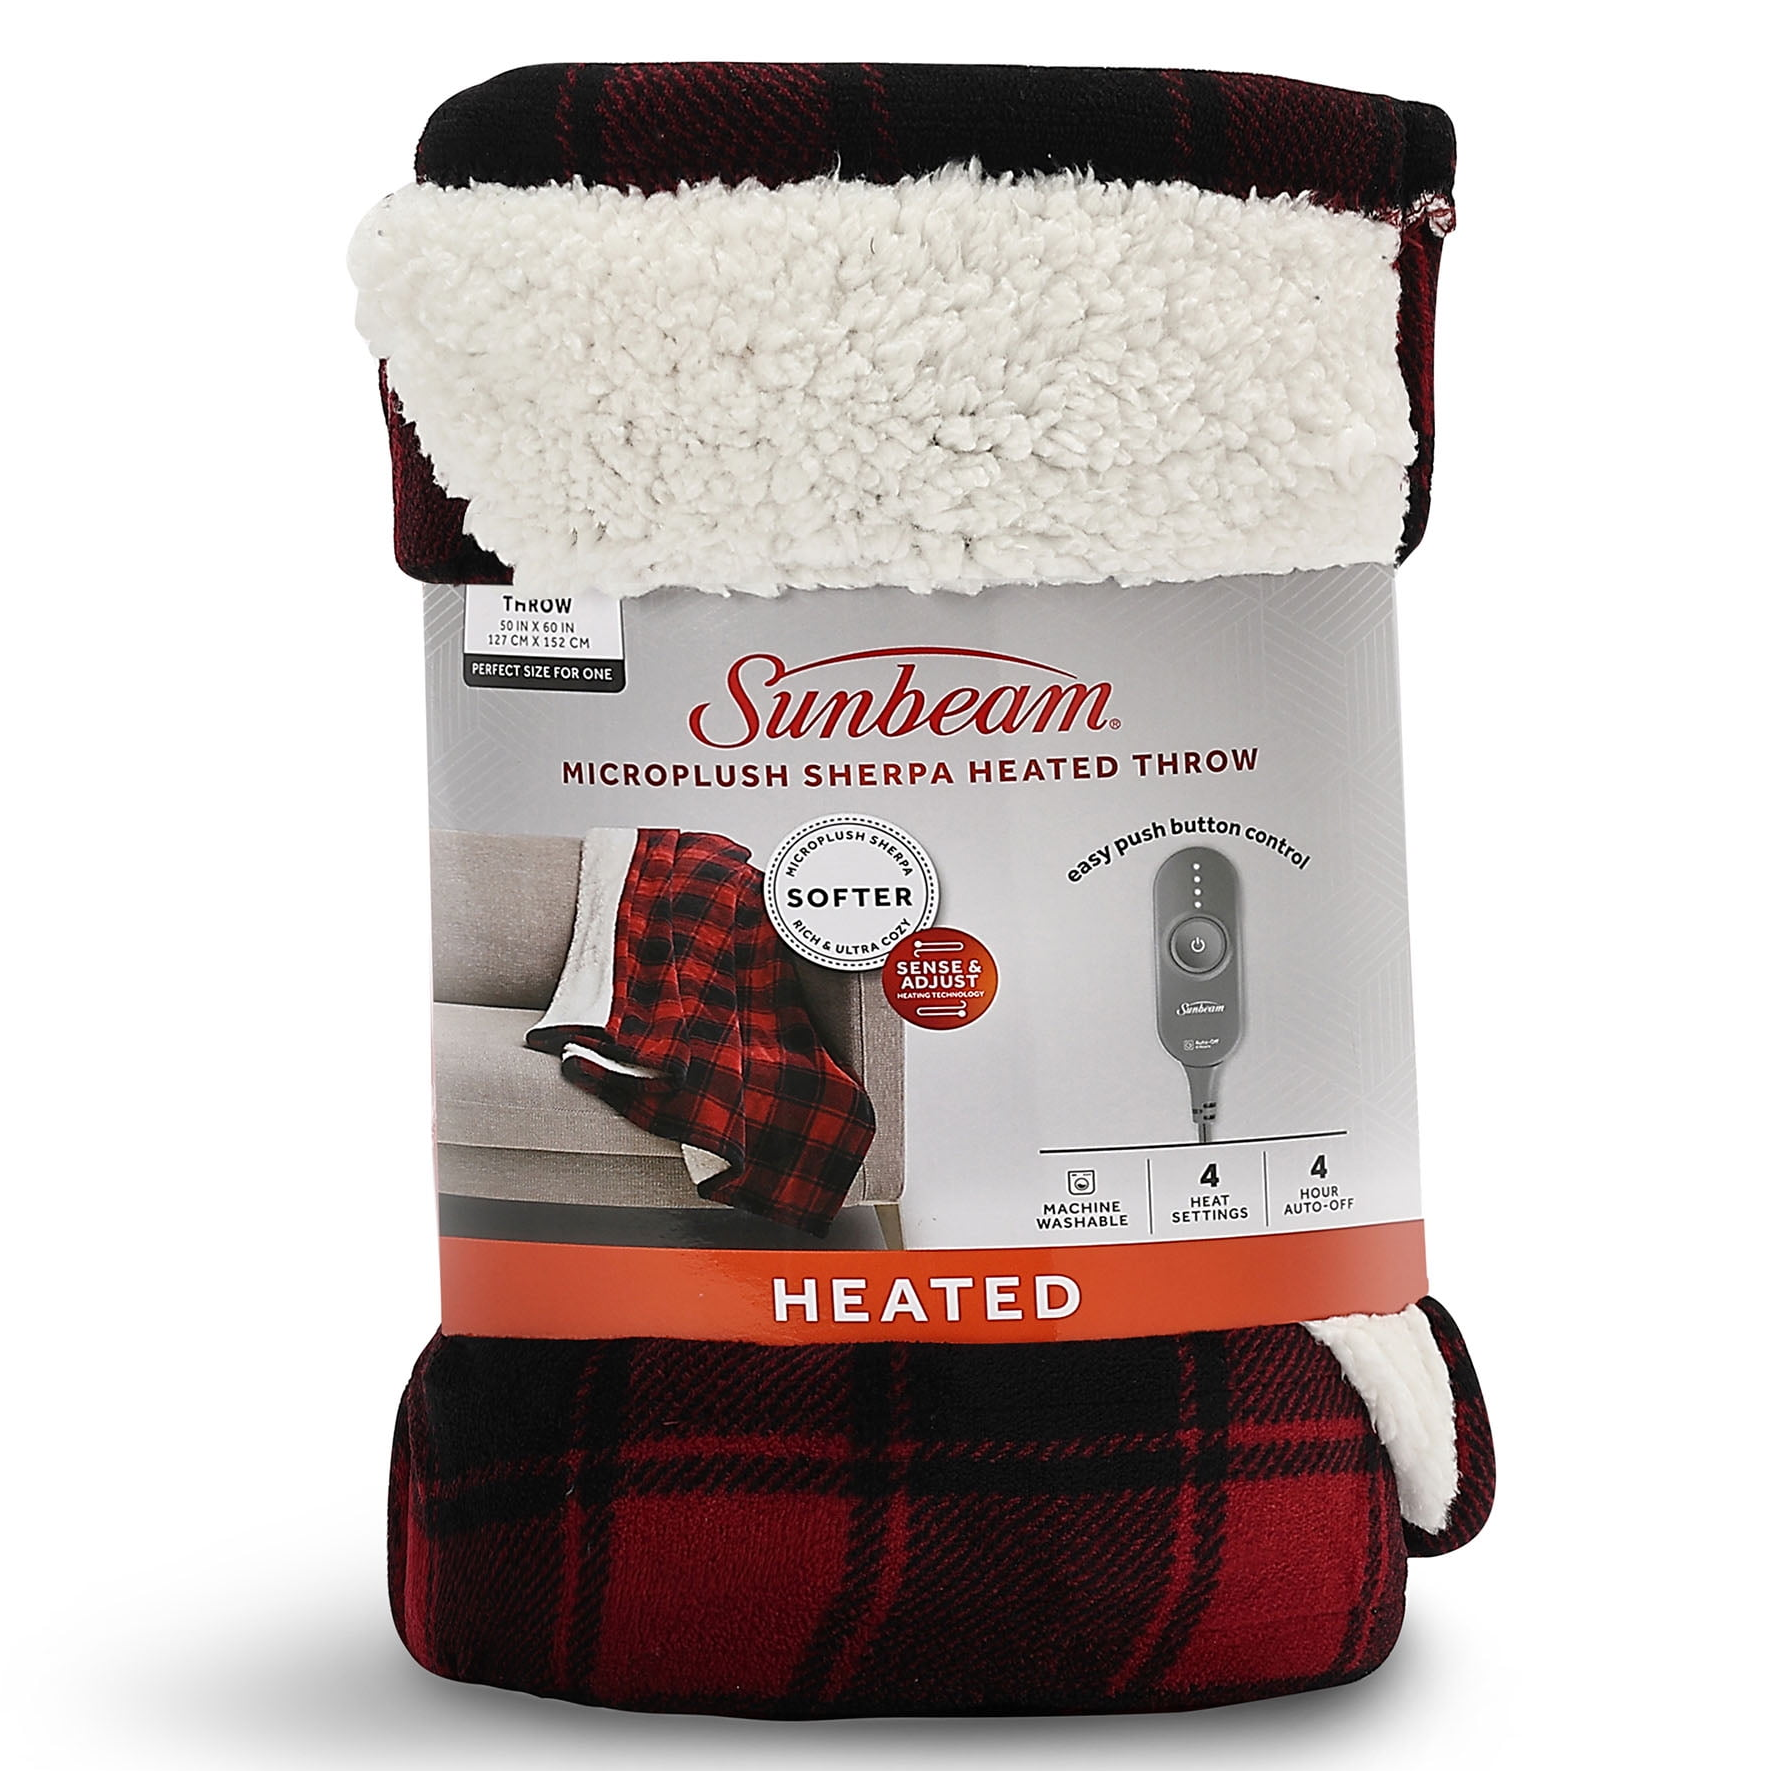 Sunbeam Microplush Sherpa Electric Heated Throw Blanket, Red and Black Buffalo Plaid - image 1 of 9